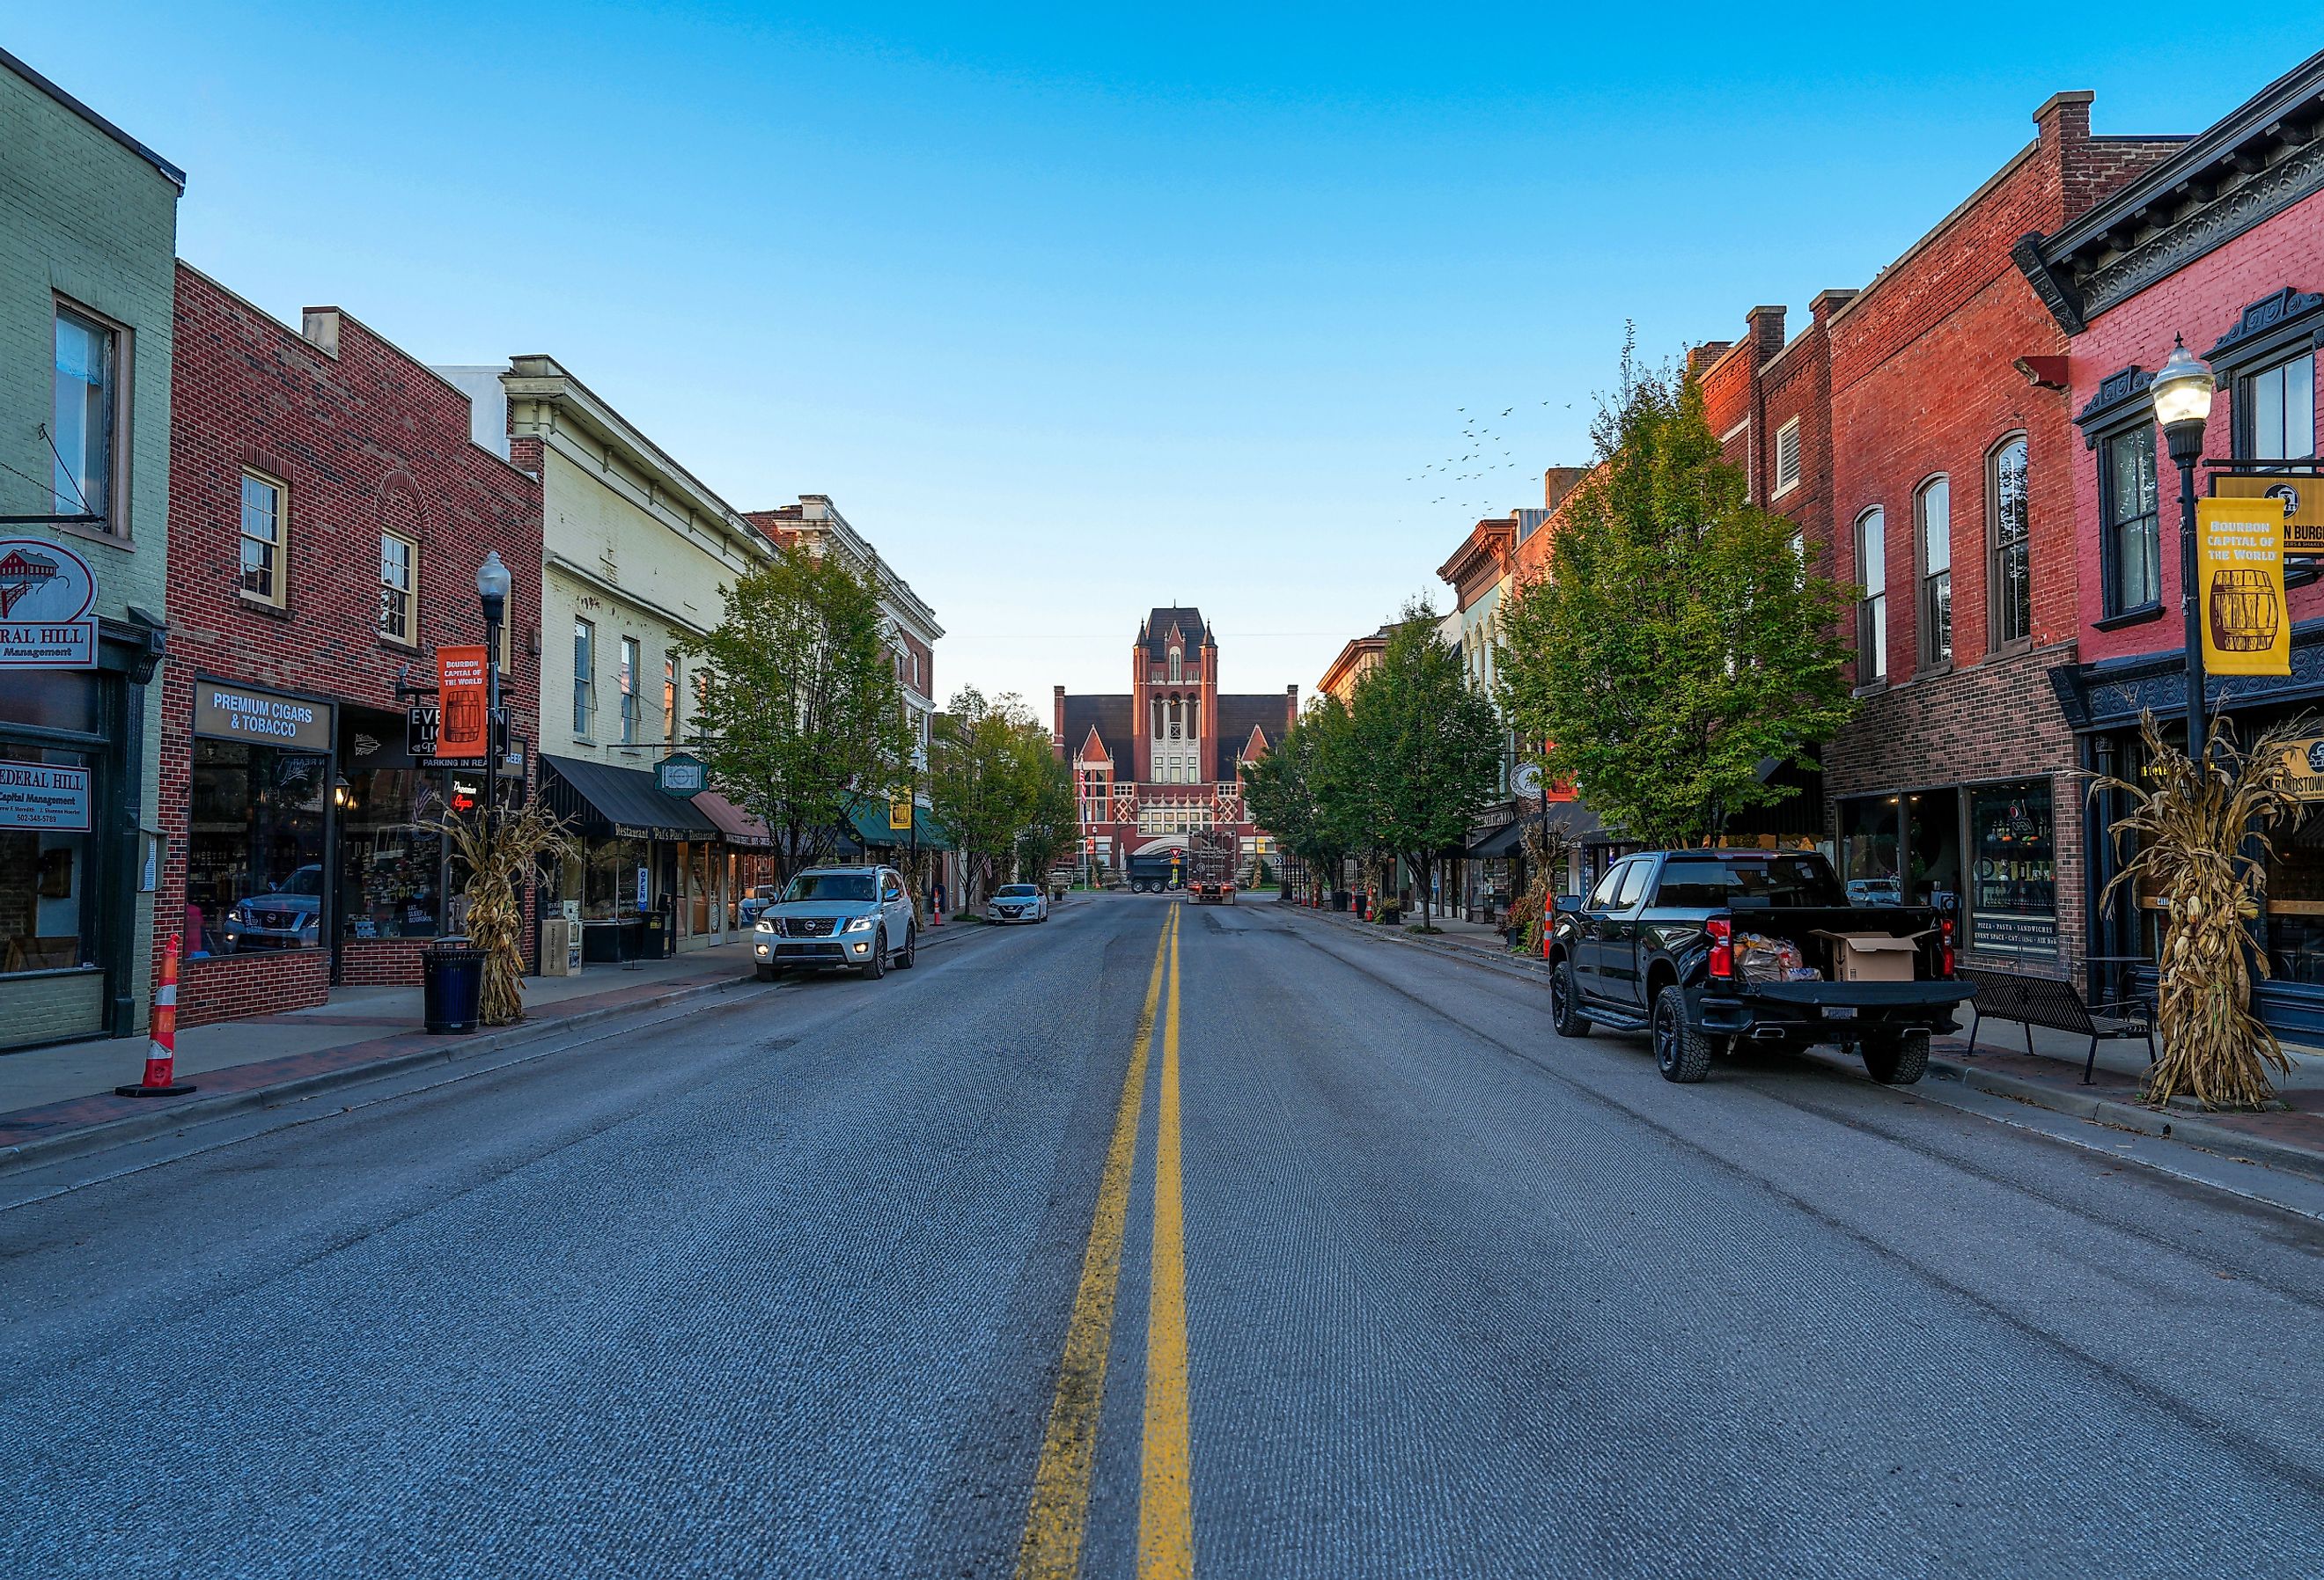 Brick buildings along the main street in Bardstown, Kentucky. Image credit Jason Busa via Shutterstock